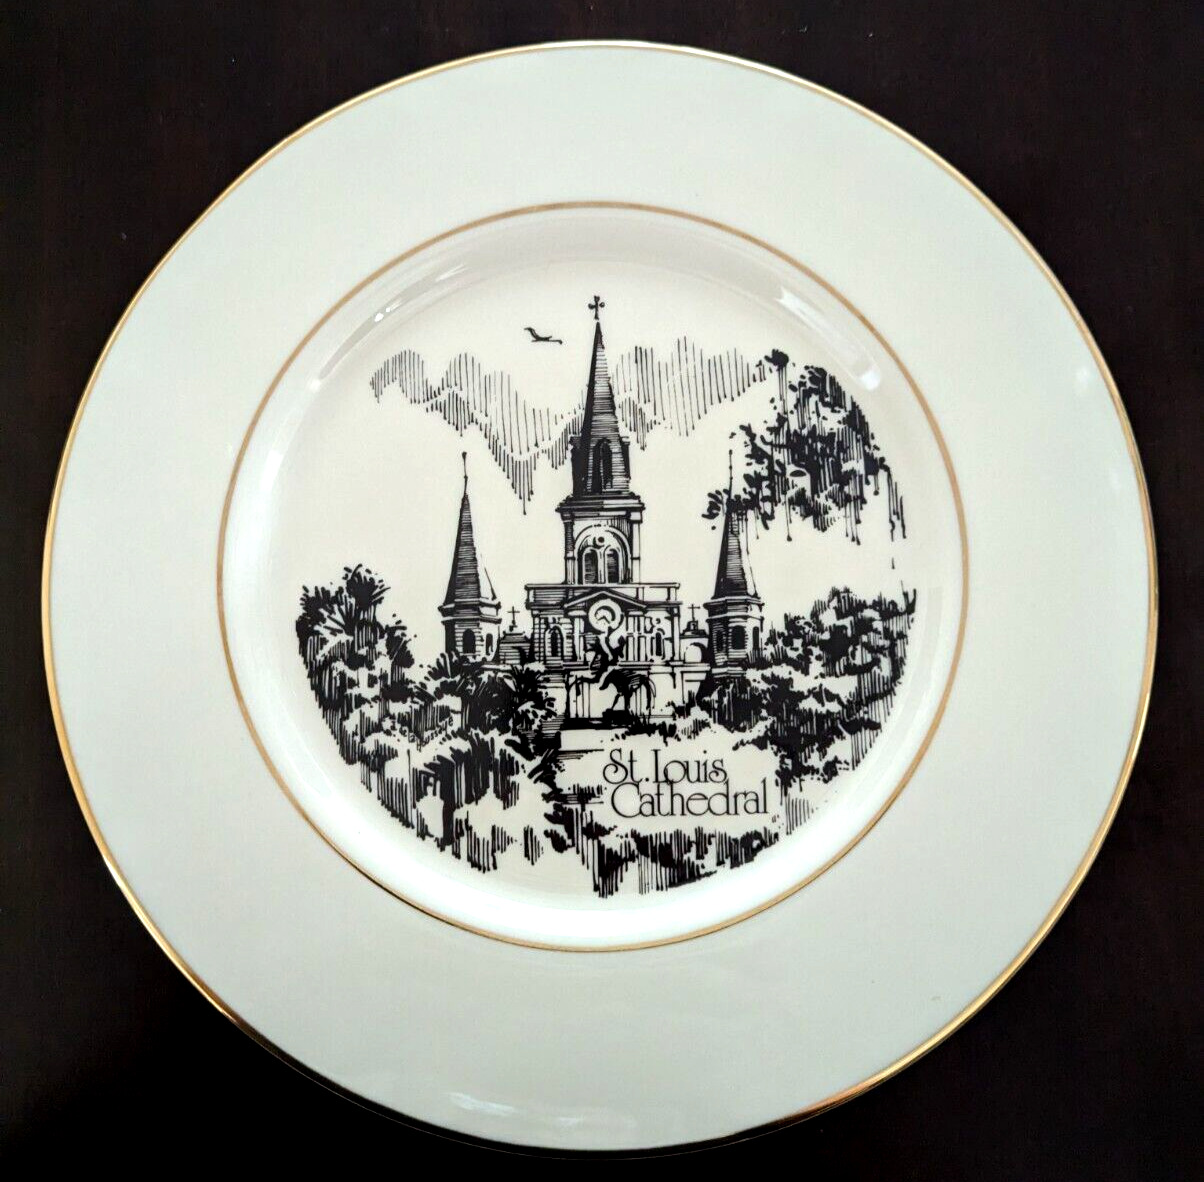 St Louis Cathedral New Orleans Louisiana Souvenir Commemorative Plate